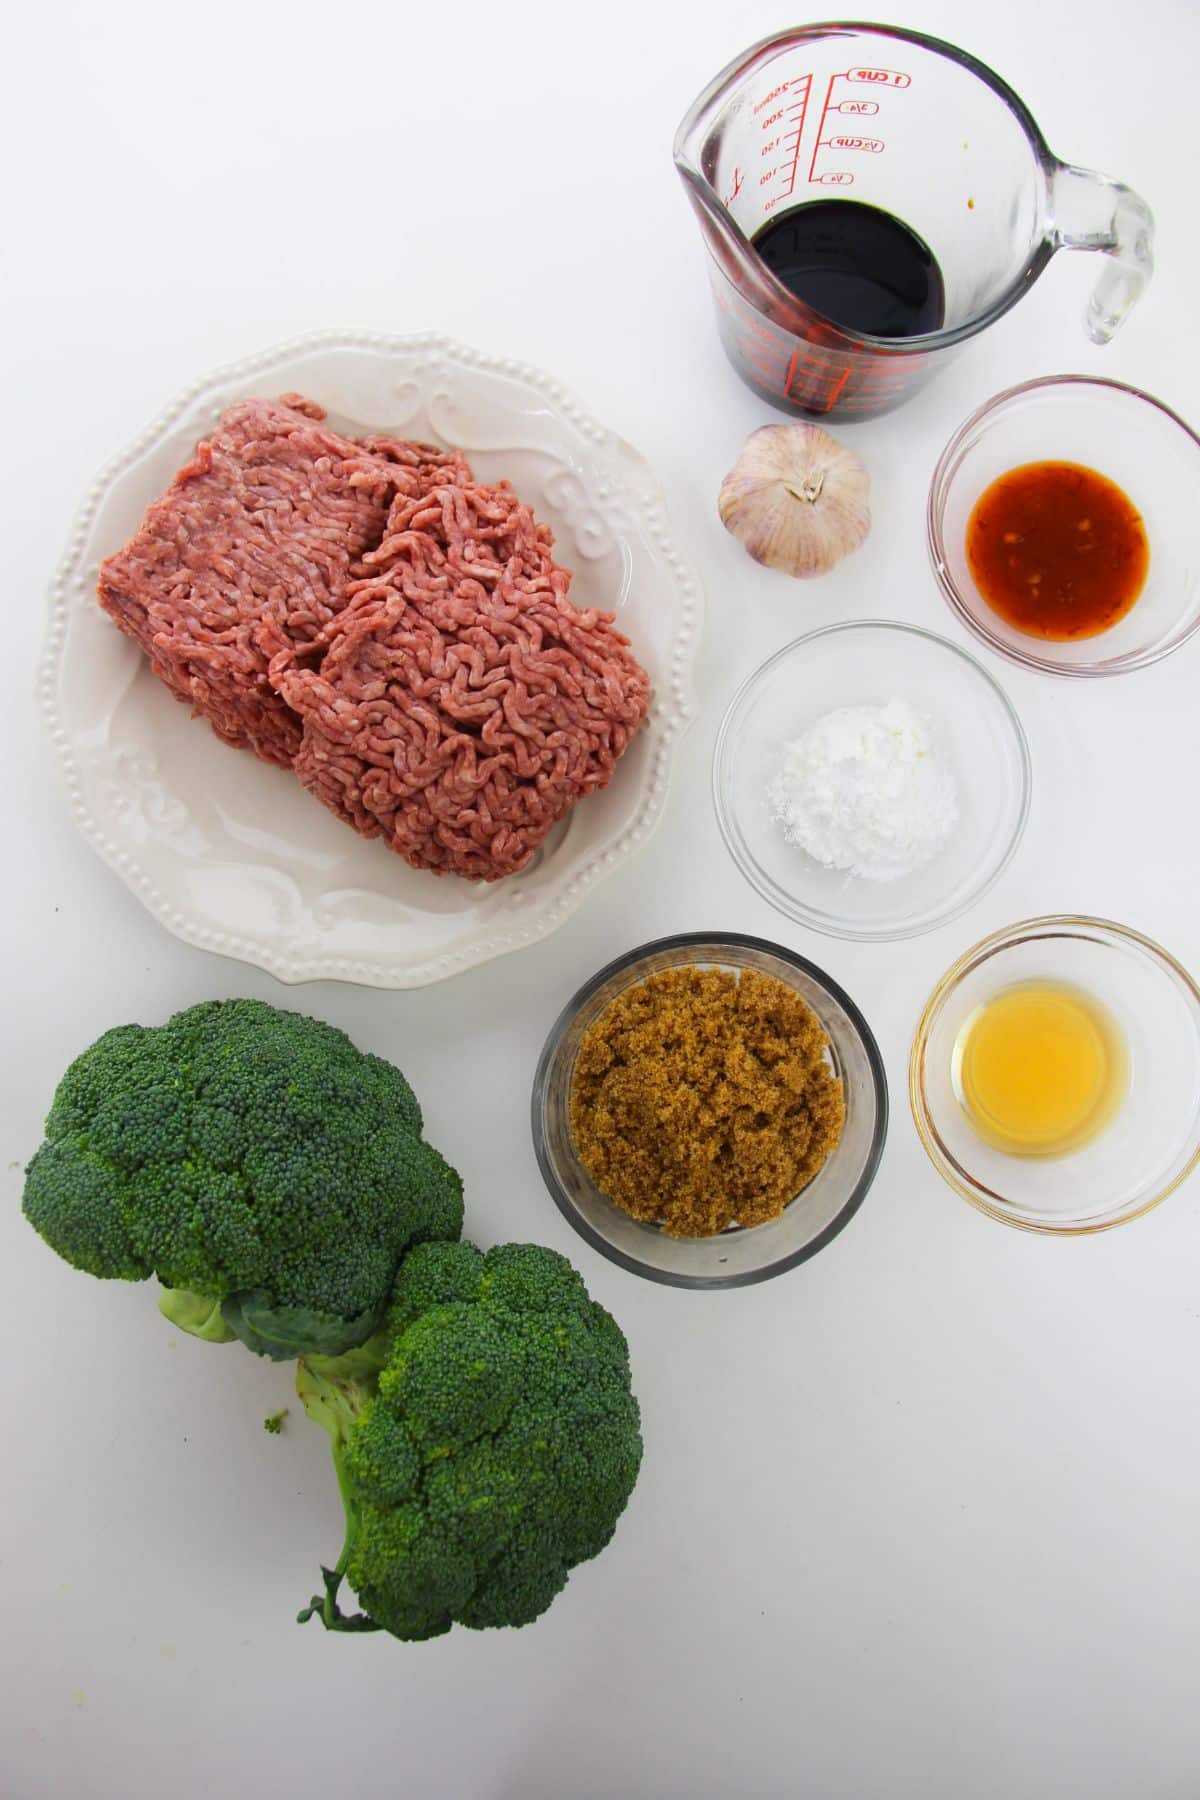 Korean Ground Beef and Broccoli ingredients.